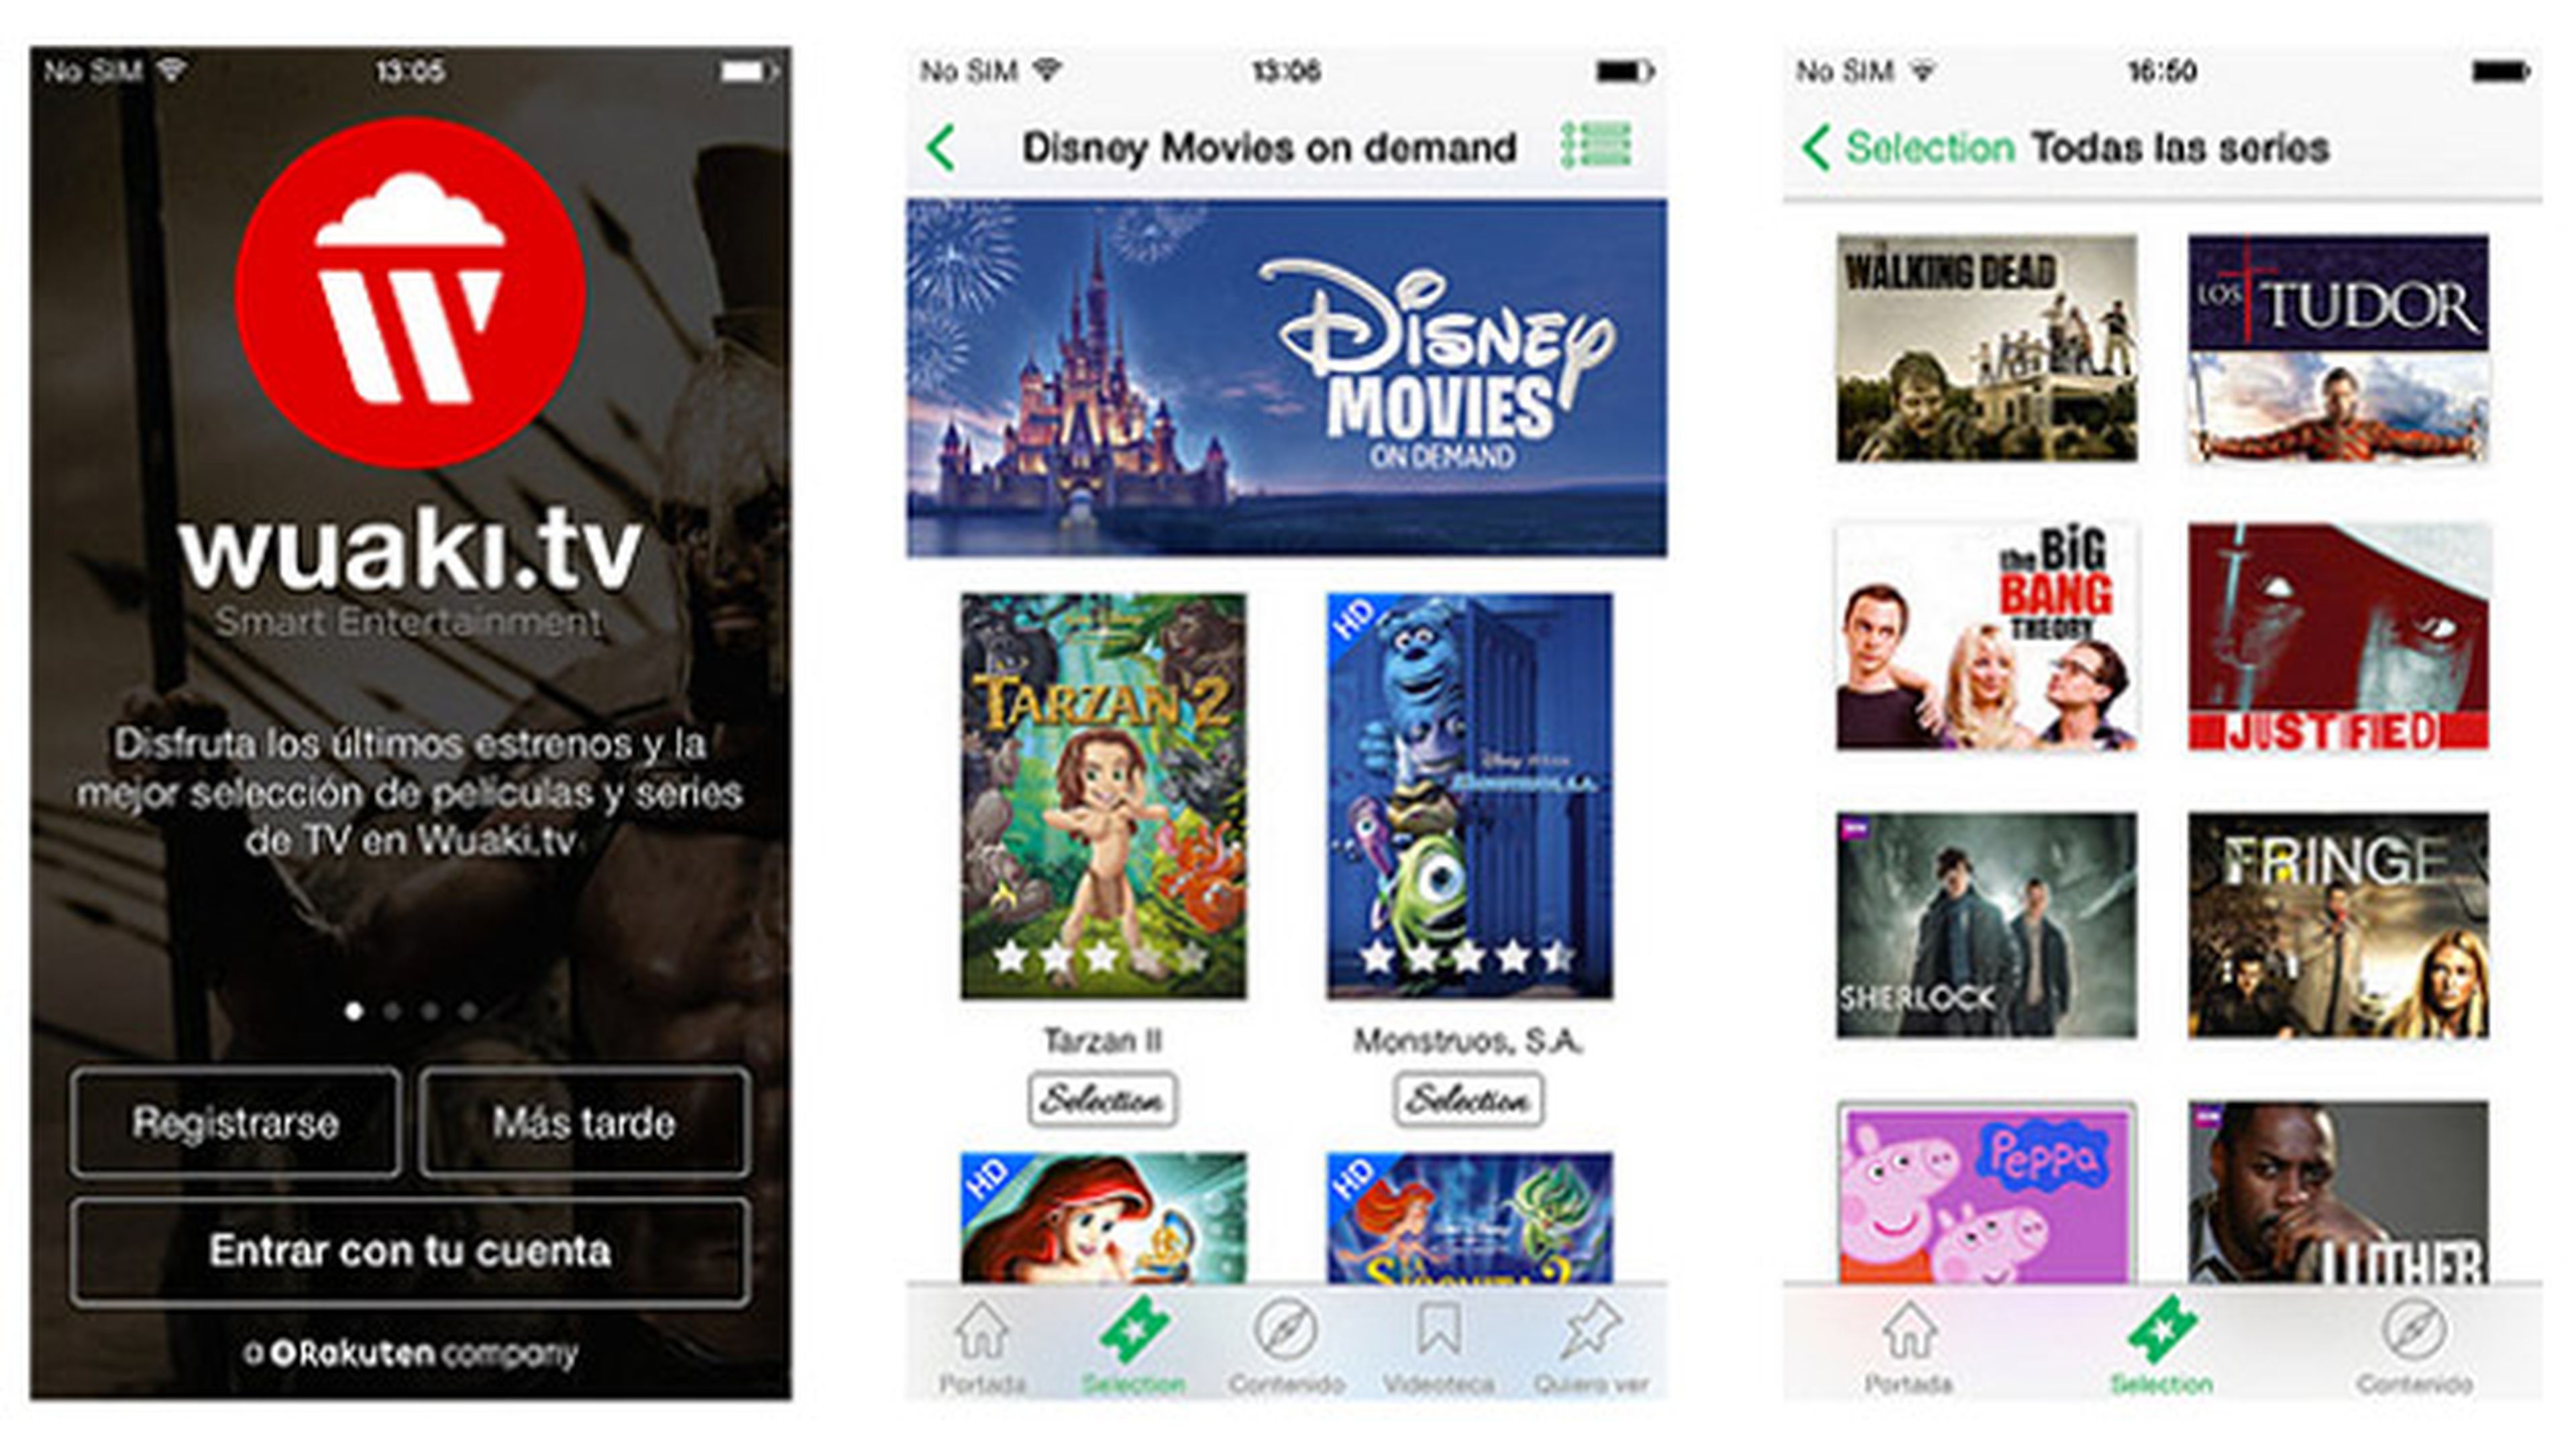 Wuaki.tv Player para iOS 7 para iPad, iPhone y iPod Touch